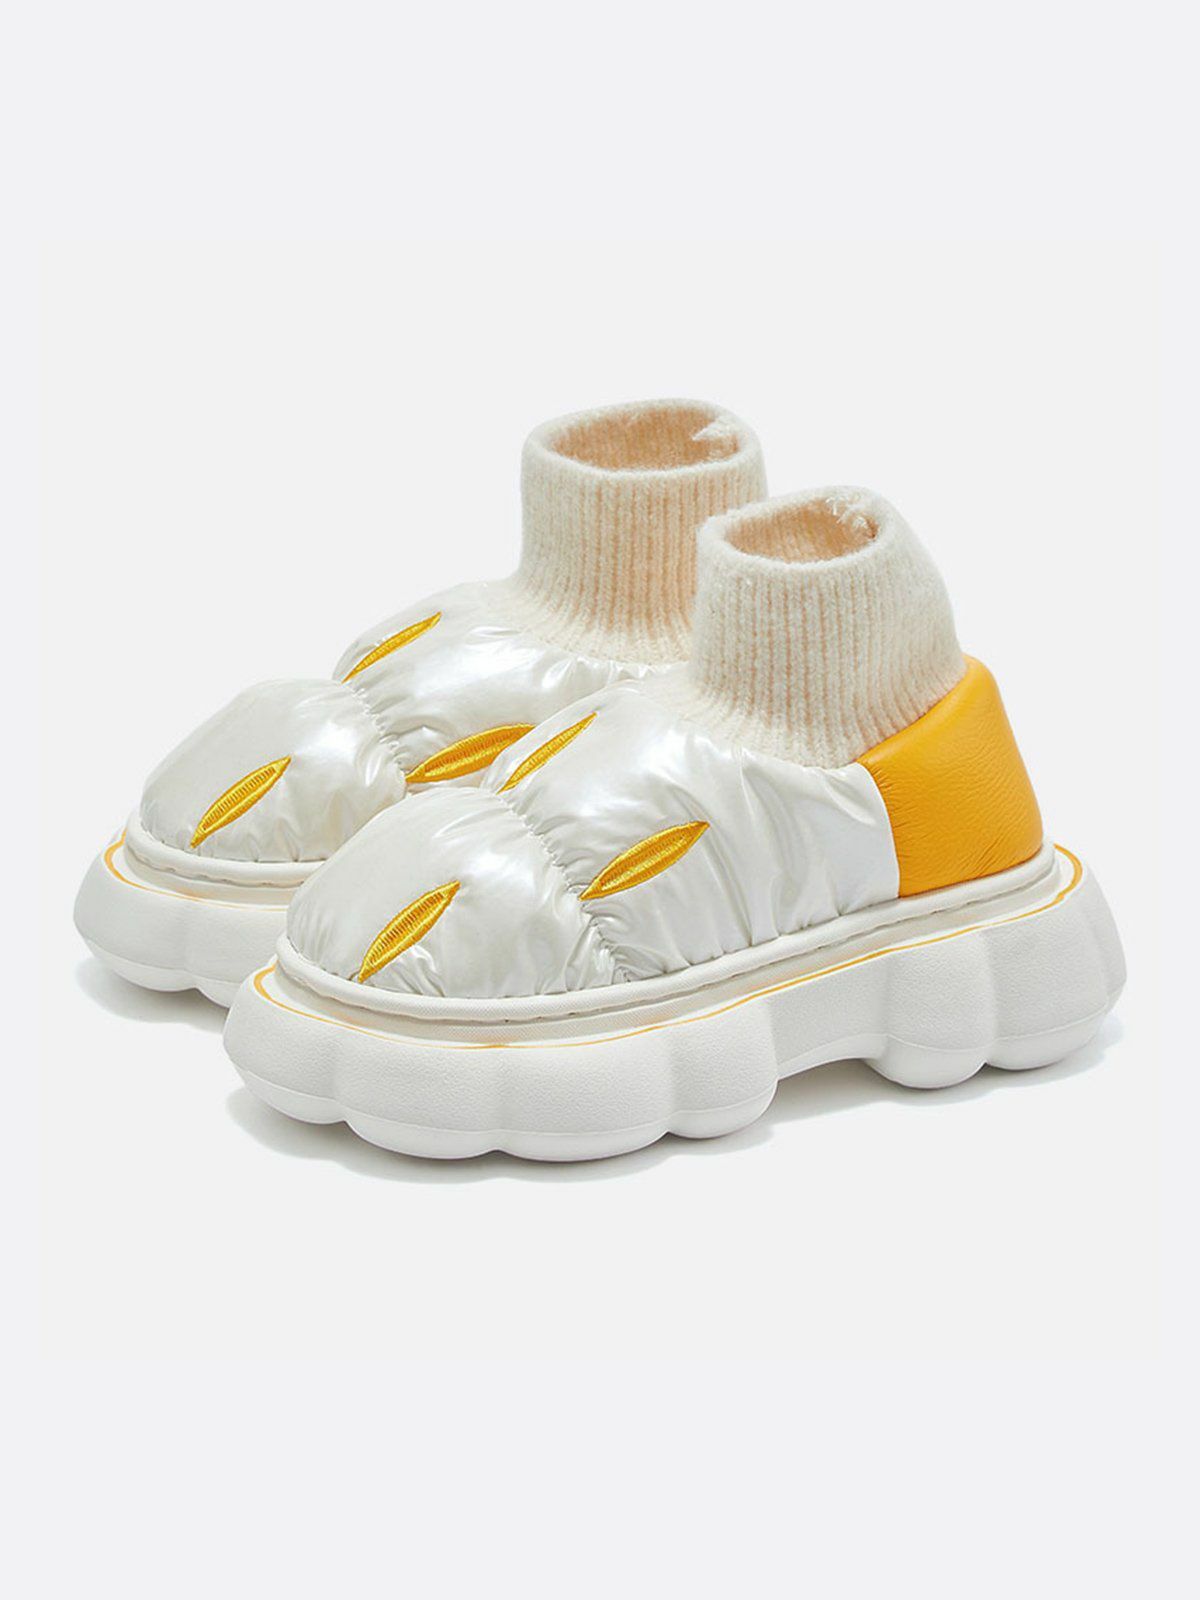 latex padded chunky sneakers edgy streetwear essential 5487